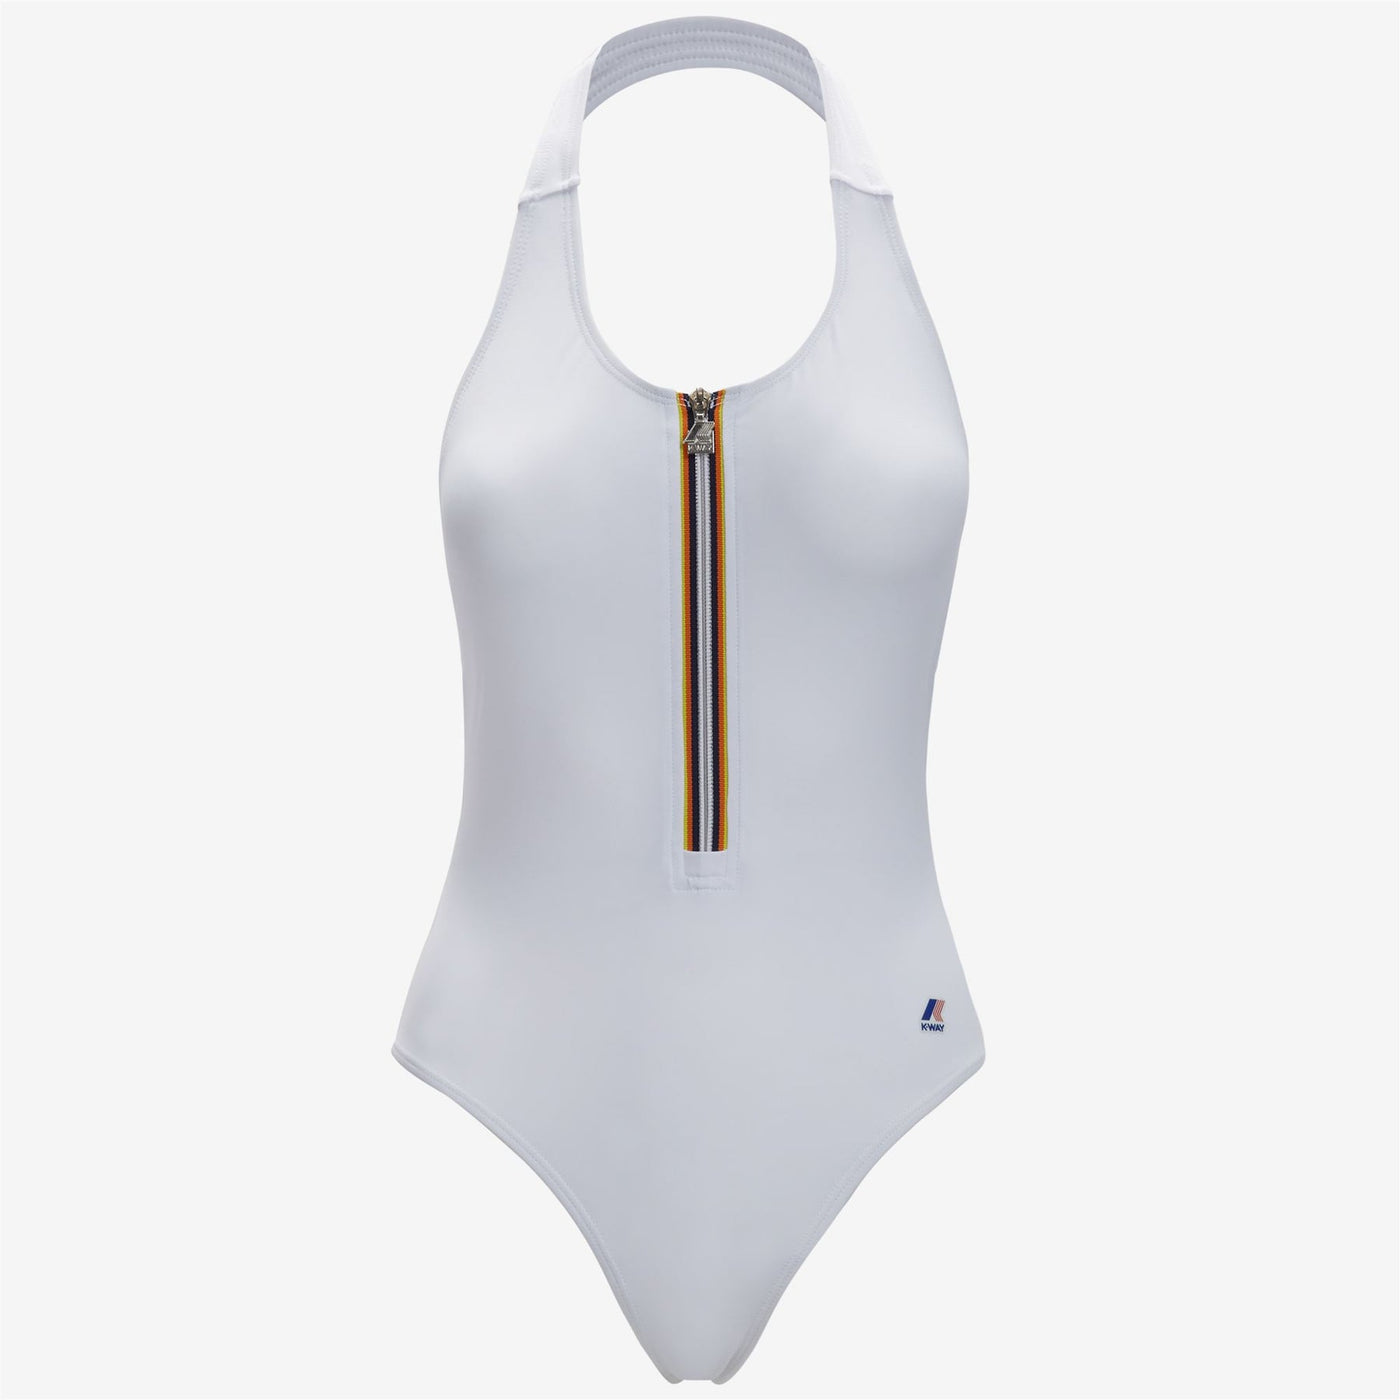 Sylvie Beach - Bathing Suits - Swimsuit - Woman - WHITE